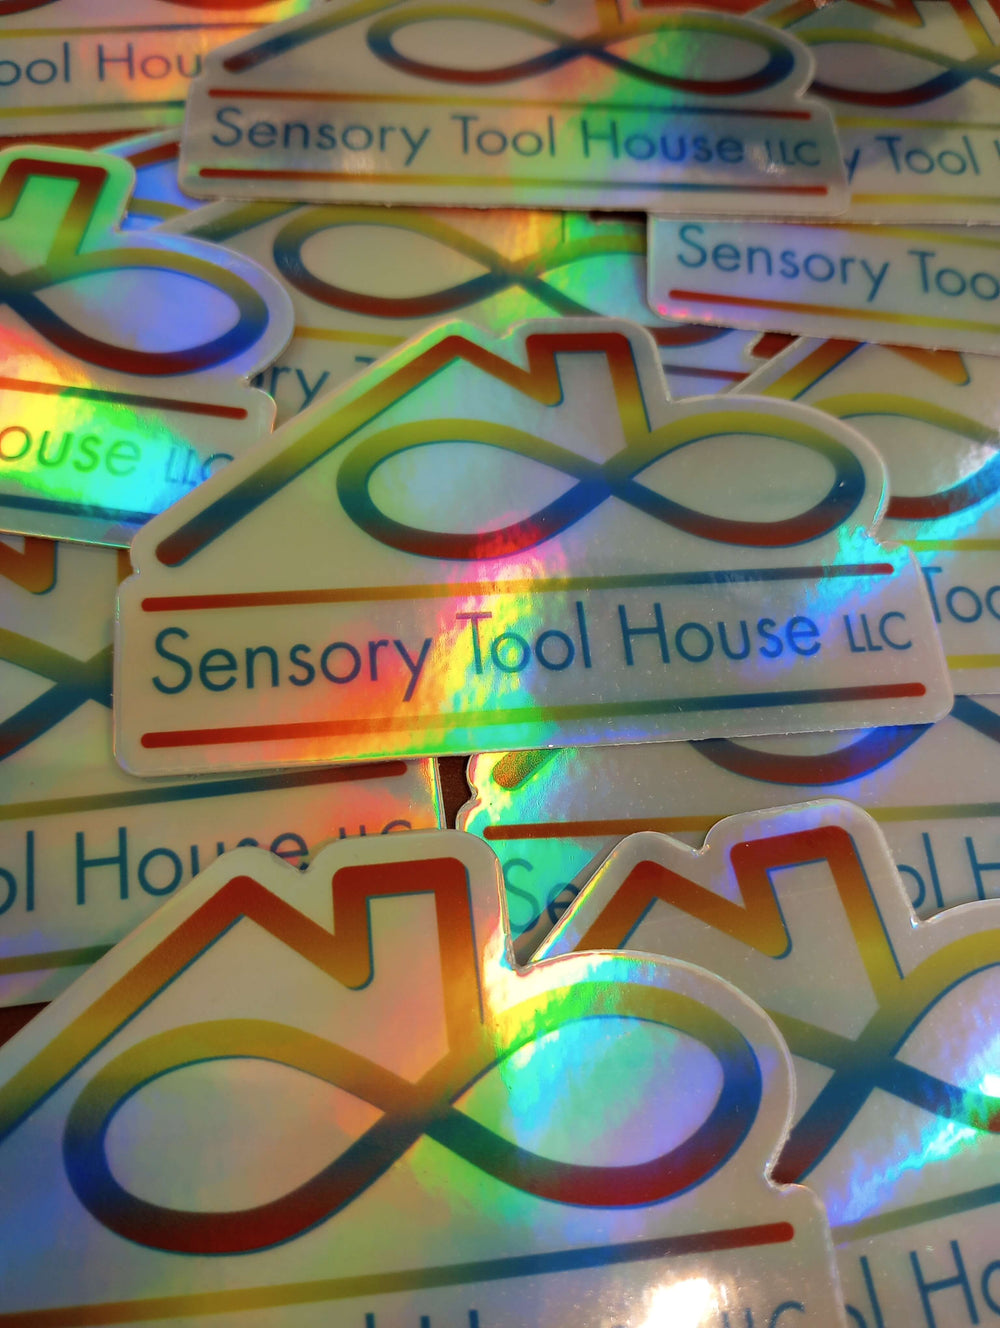 The holographic Sensory Tool House sticker.